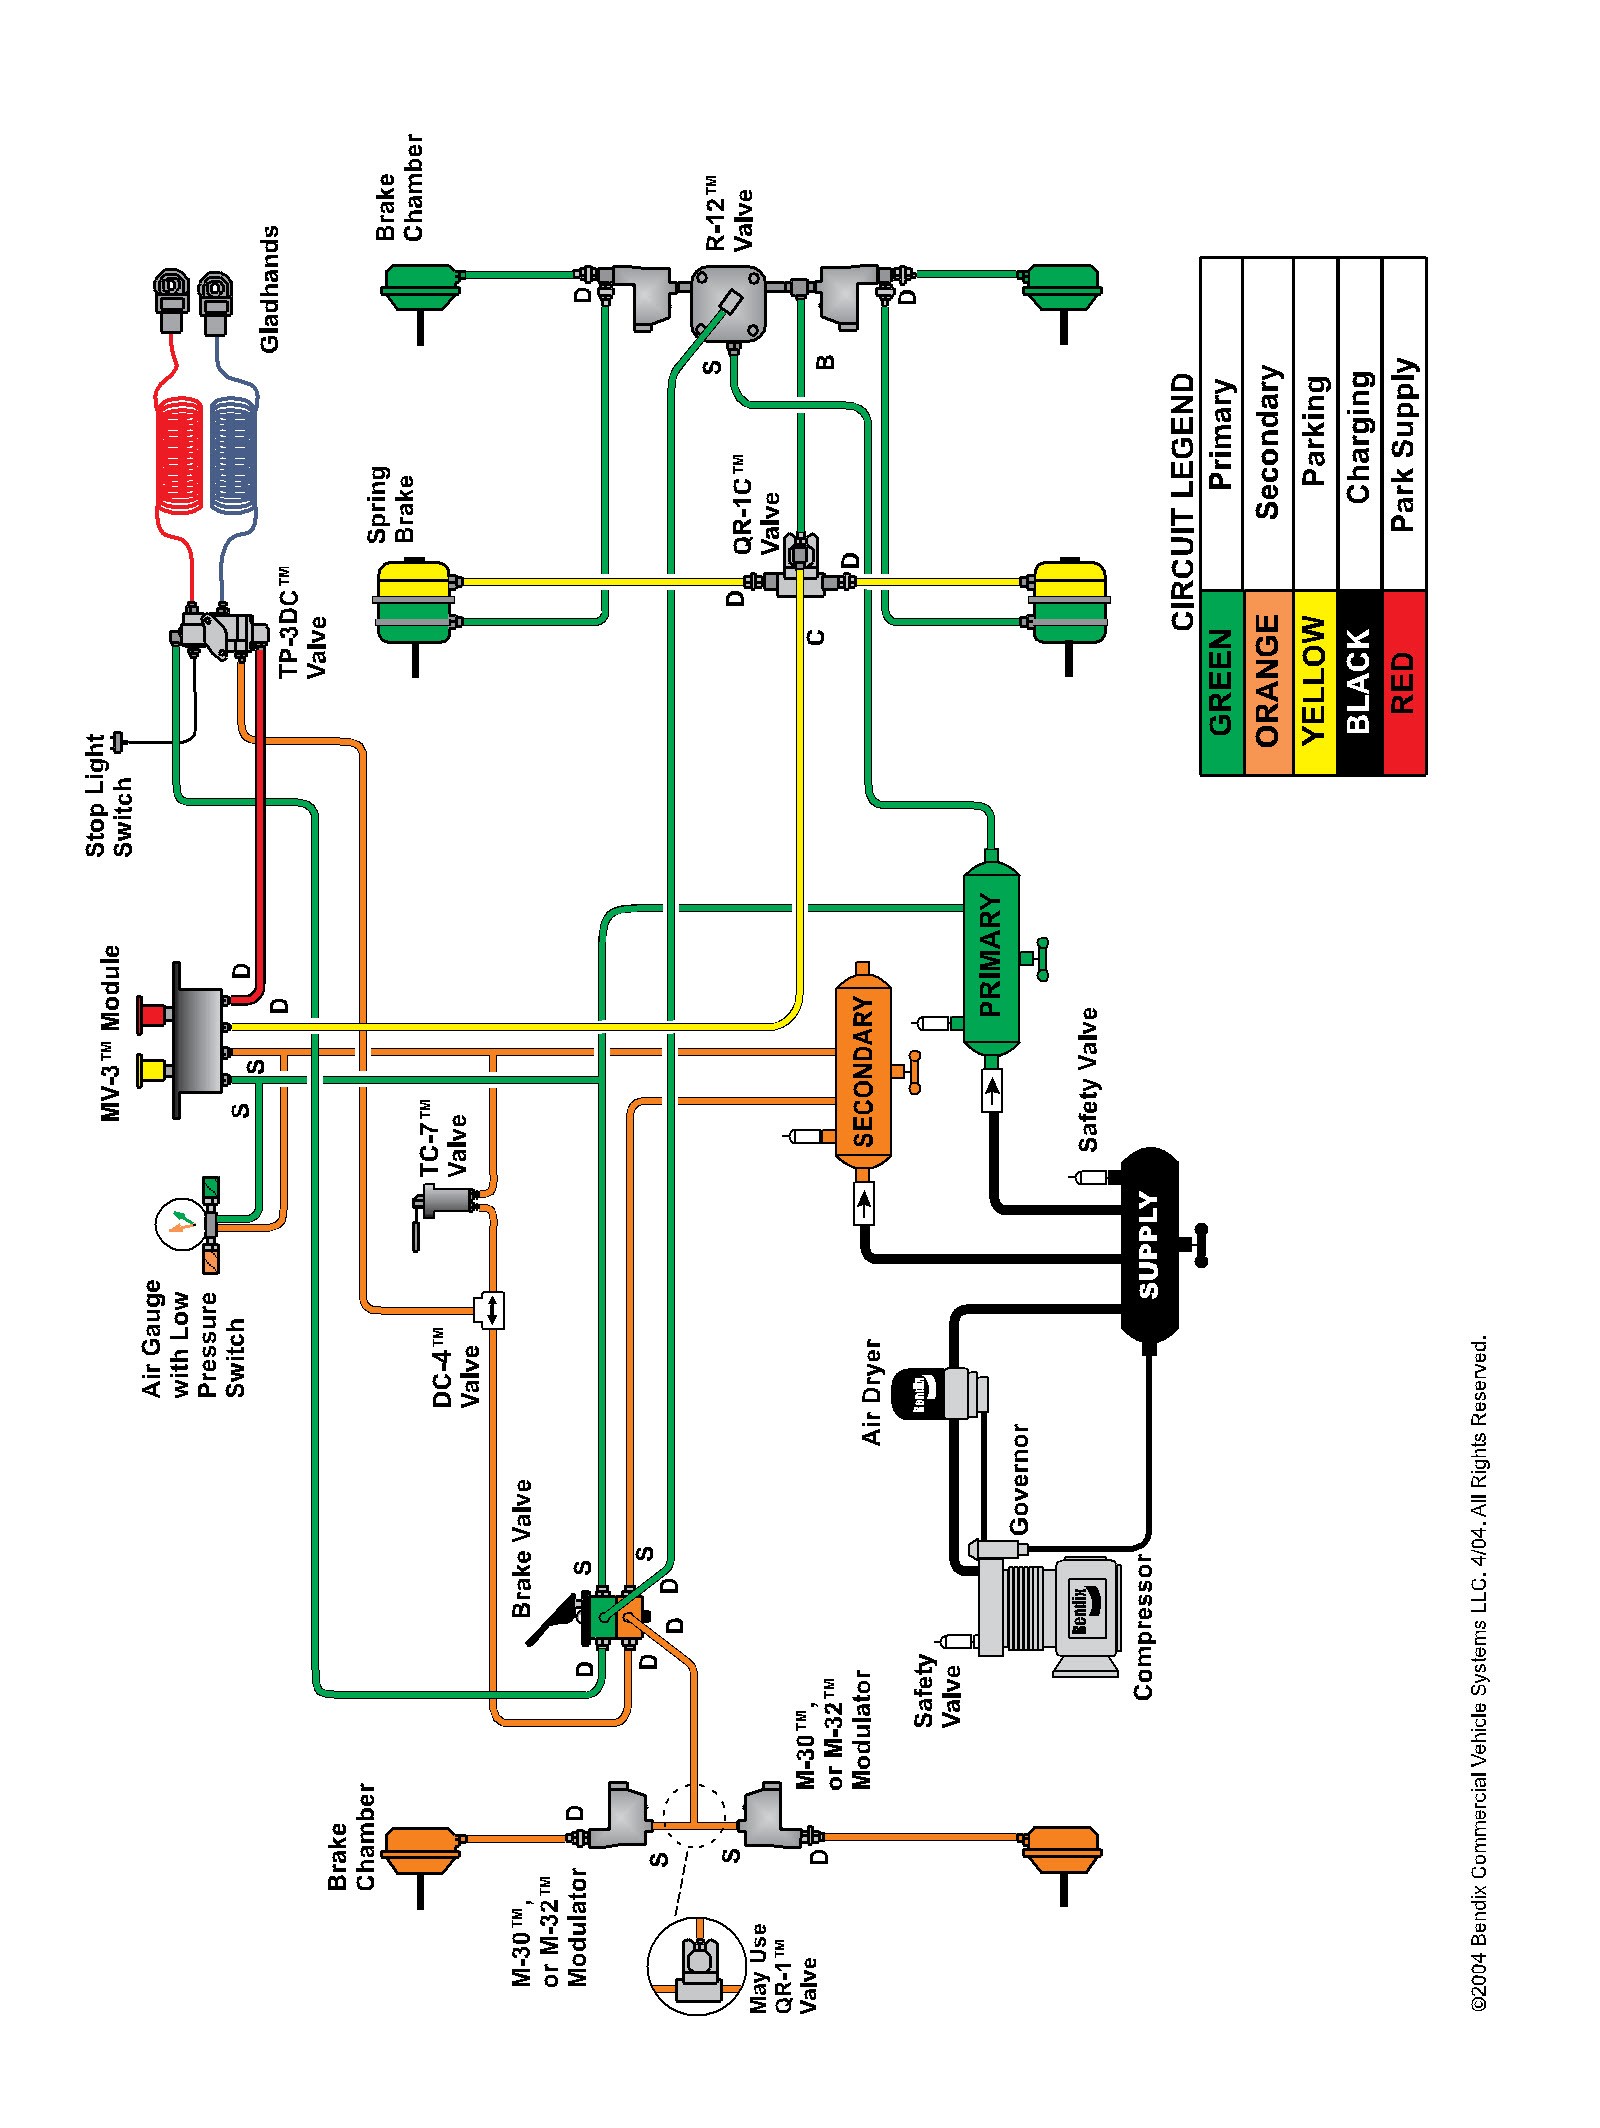 School Bus Air Brake System Diagram Management Unit Diagrams Besides Freightliner M2 Amu Wiring Of School Bus Air Brake System Diagram